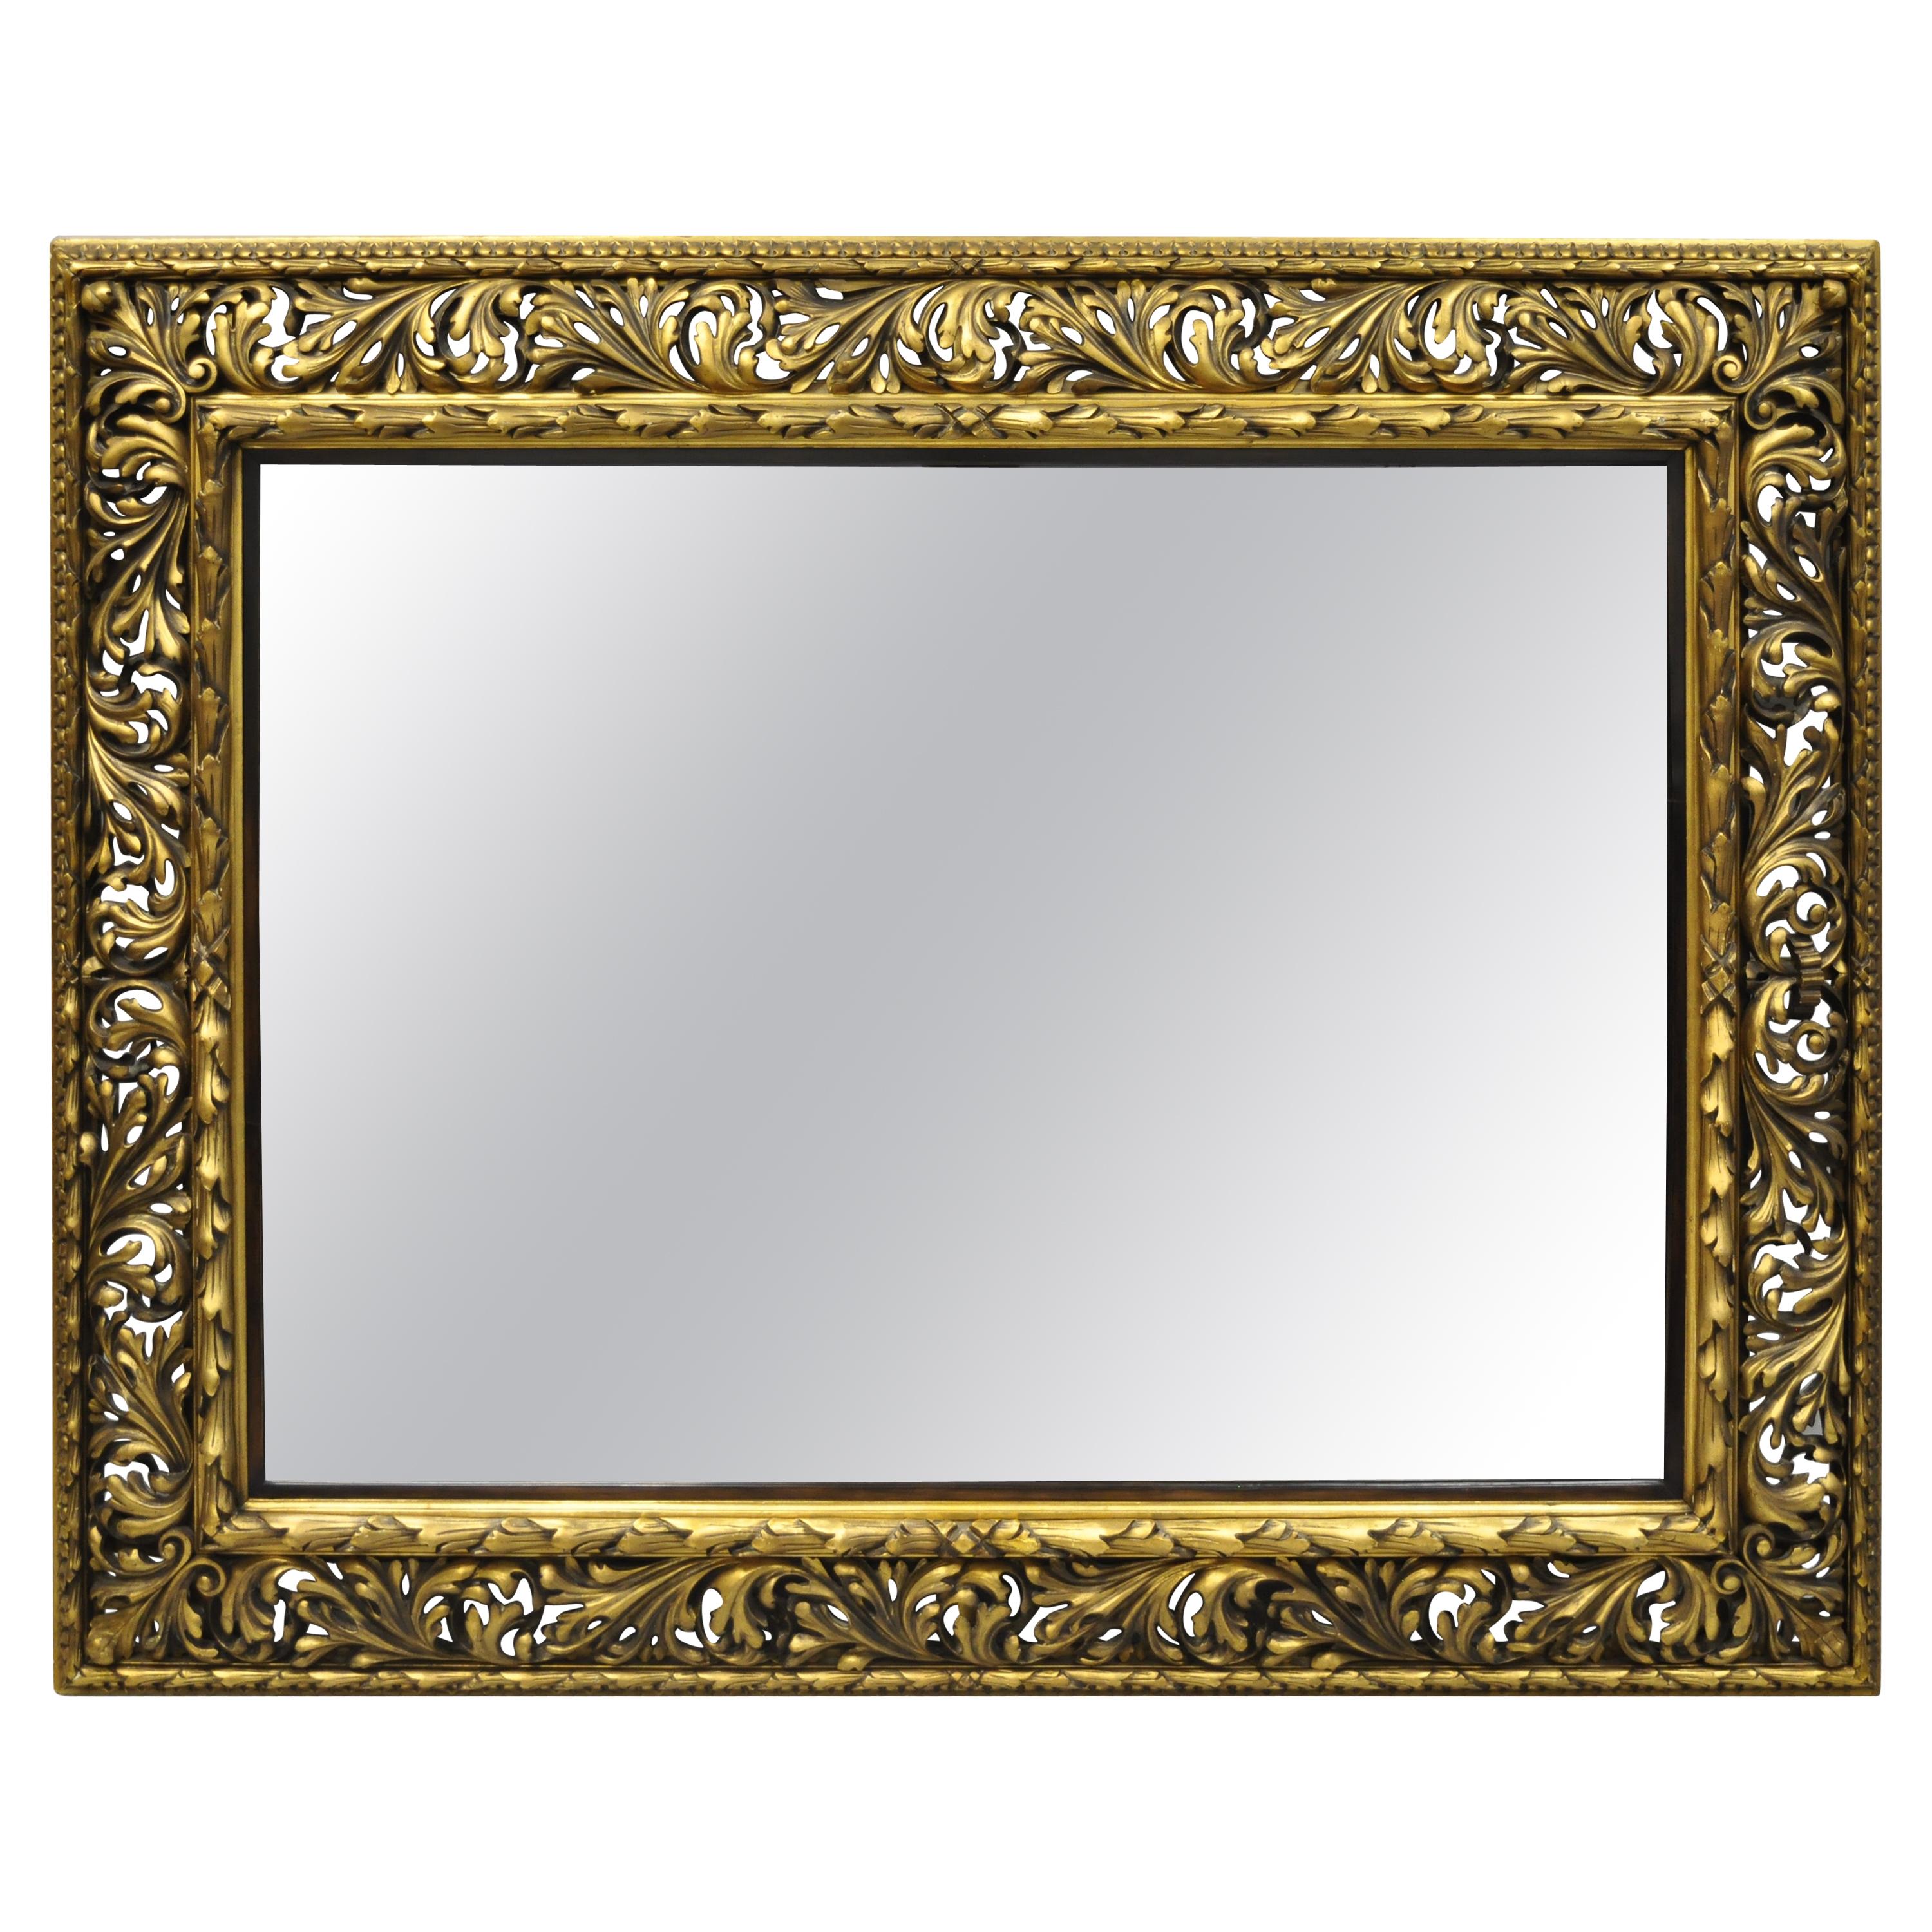 Ancien miroir baroque français de style rococo en bois sculpté et grand miroir doré en vente